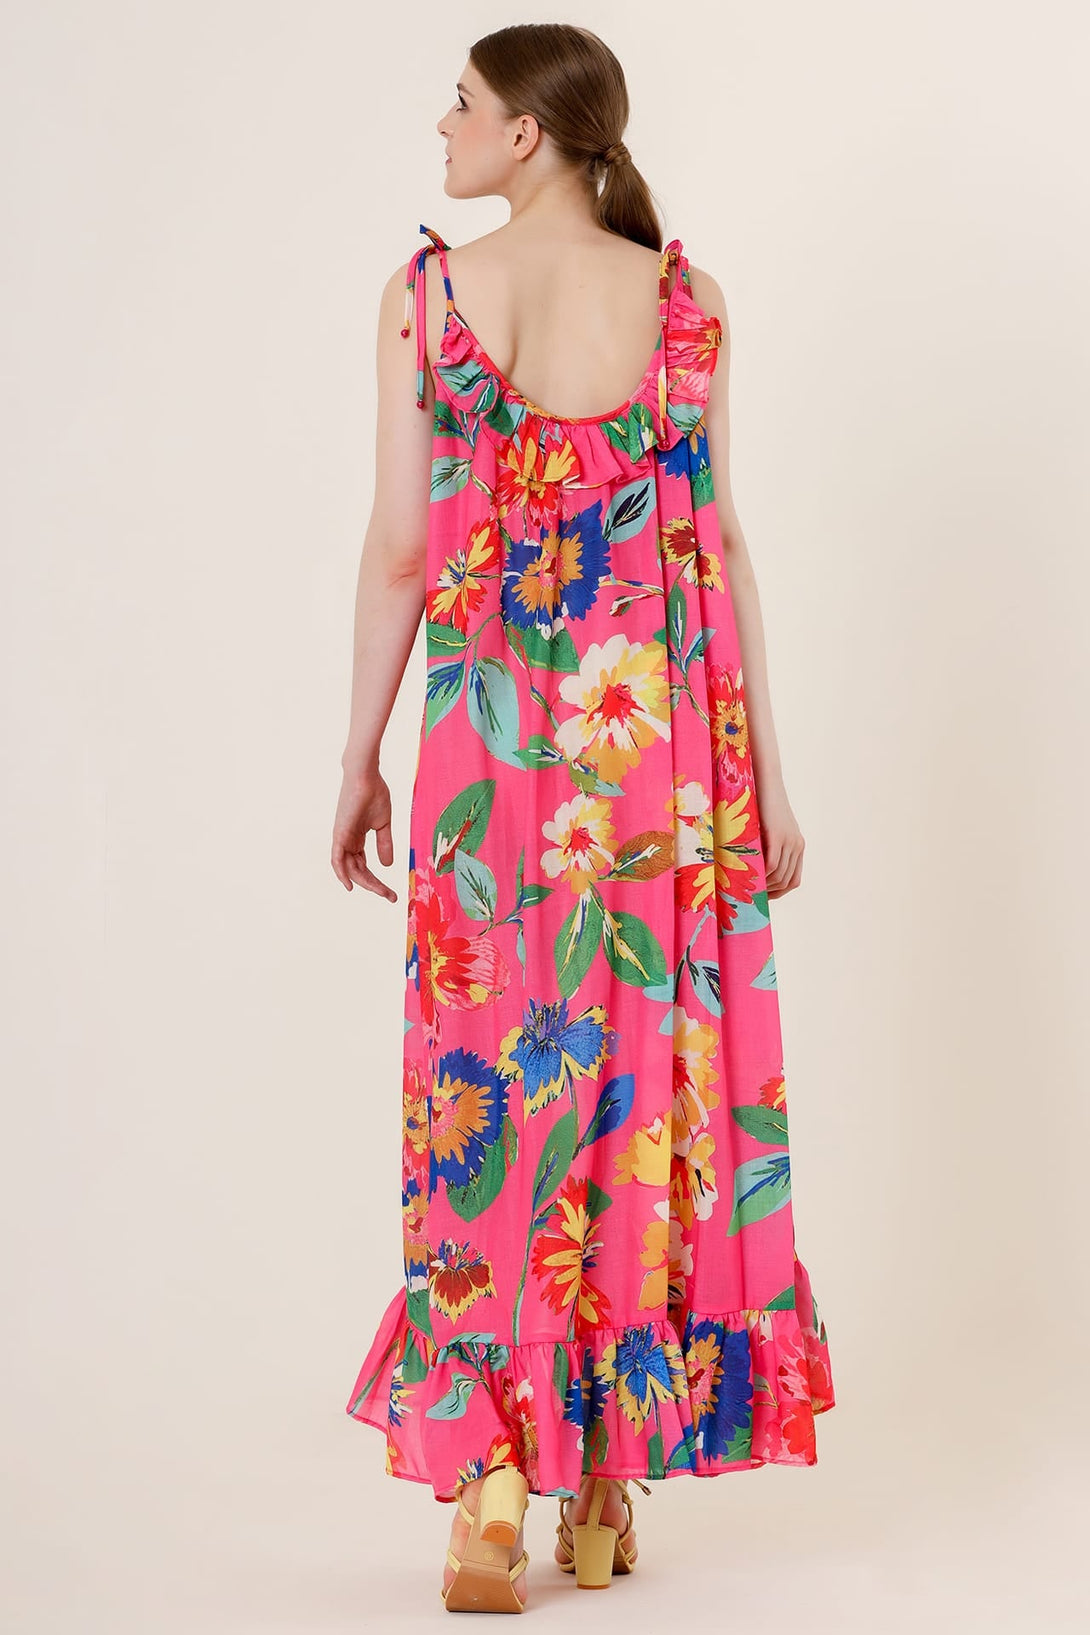 "hot pink maxi dress" "floor length dress" "floral print dress maxi" "floral maxi dress"